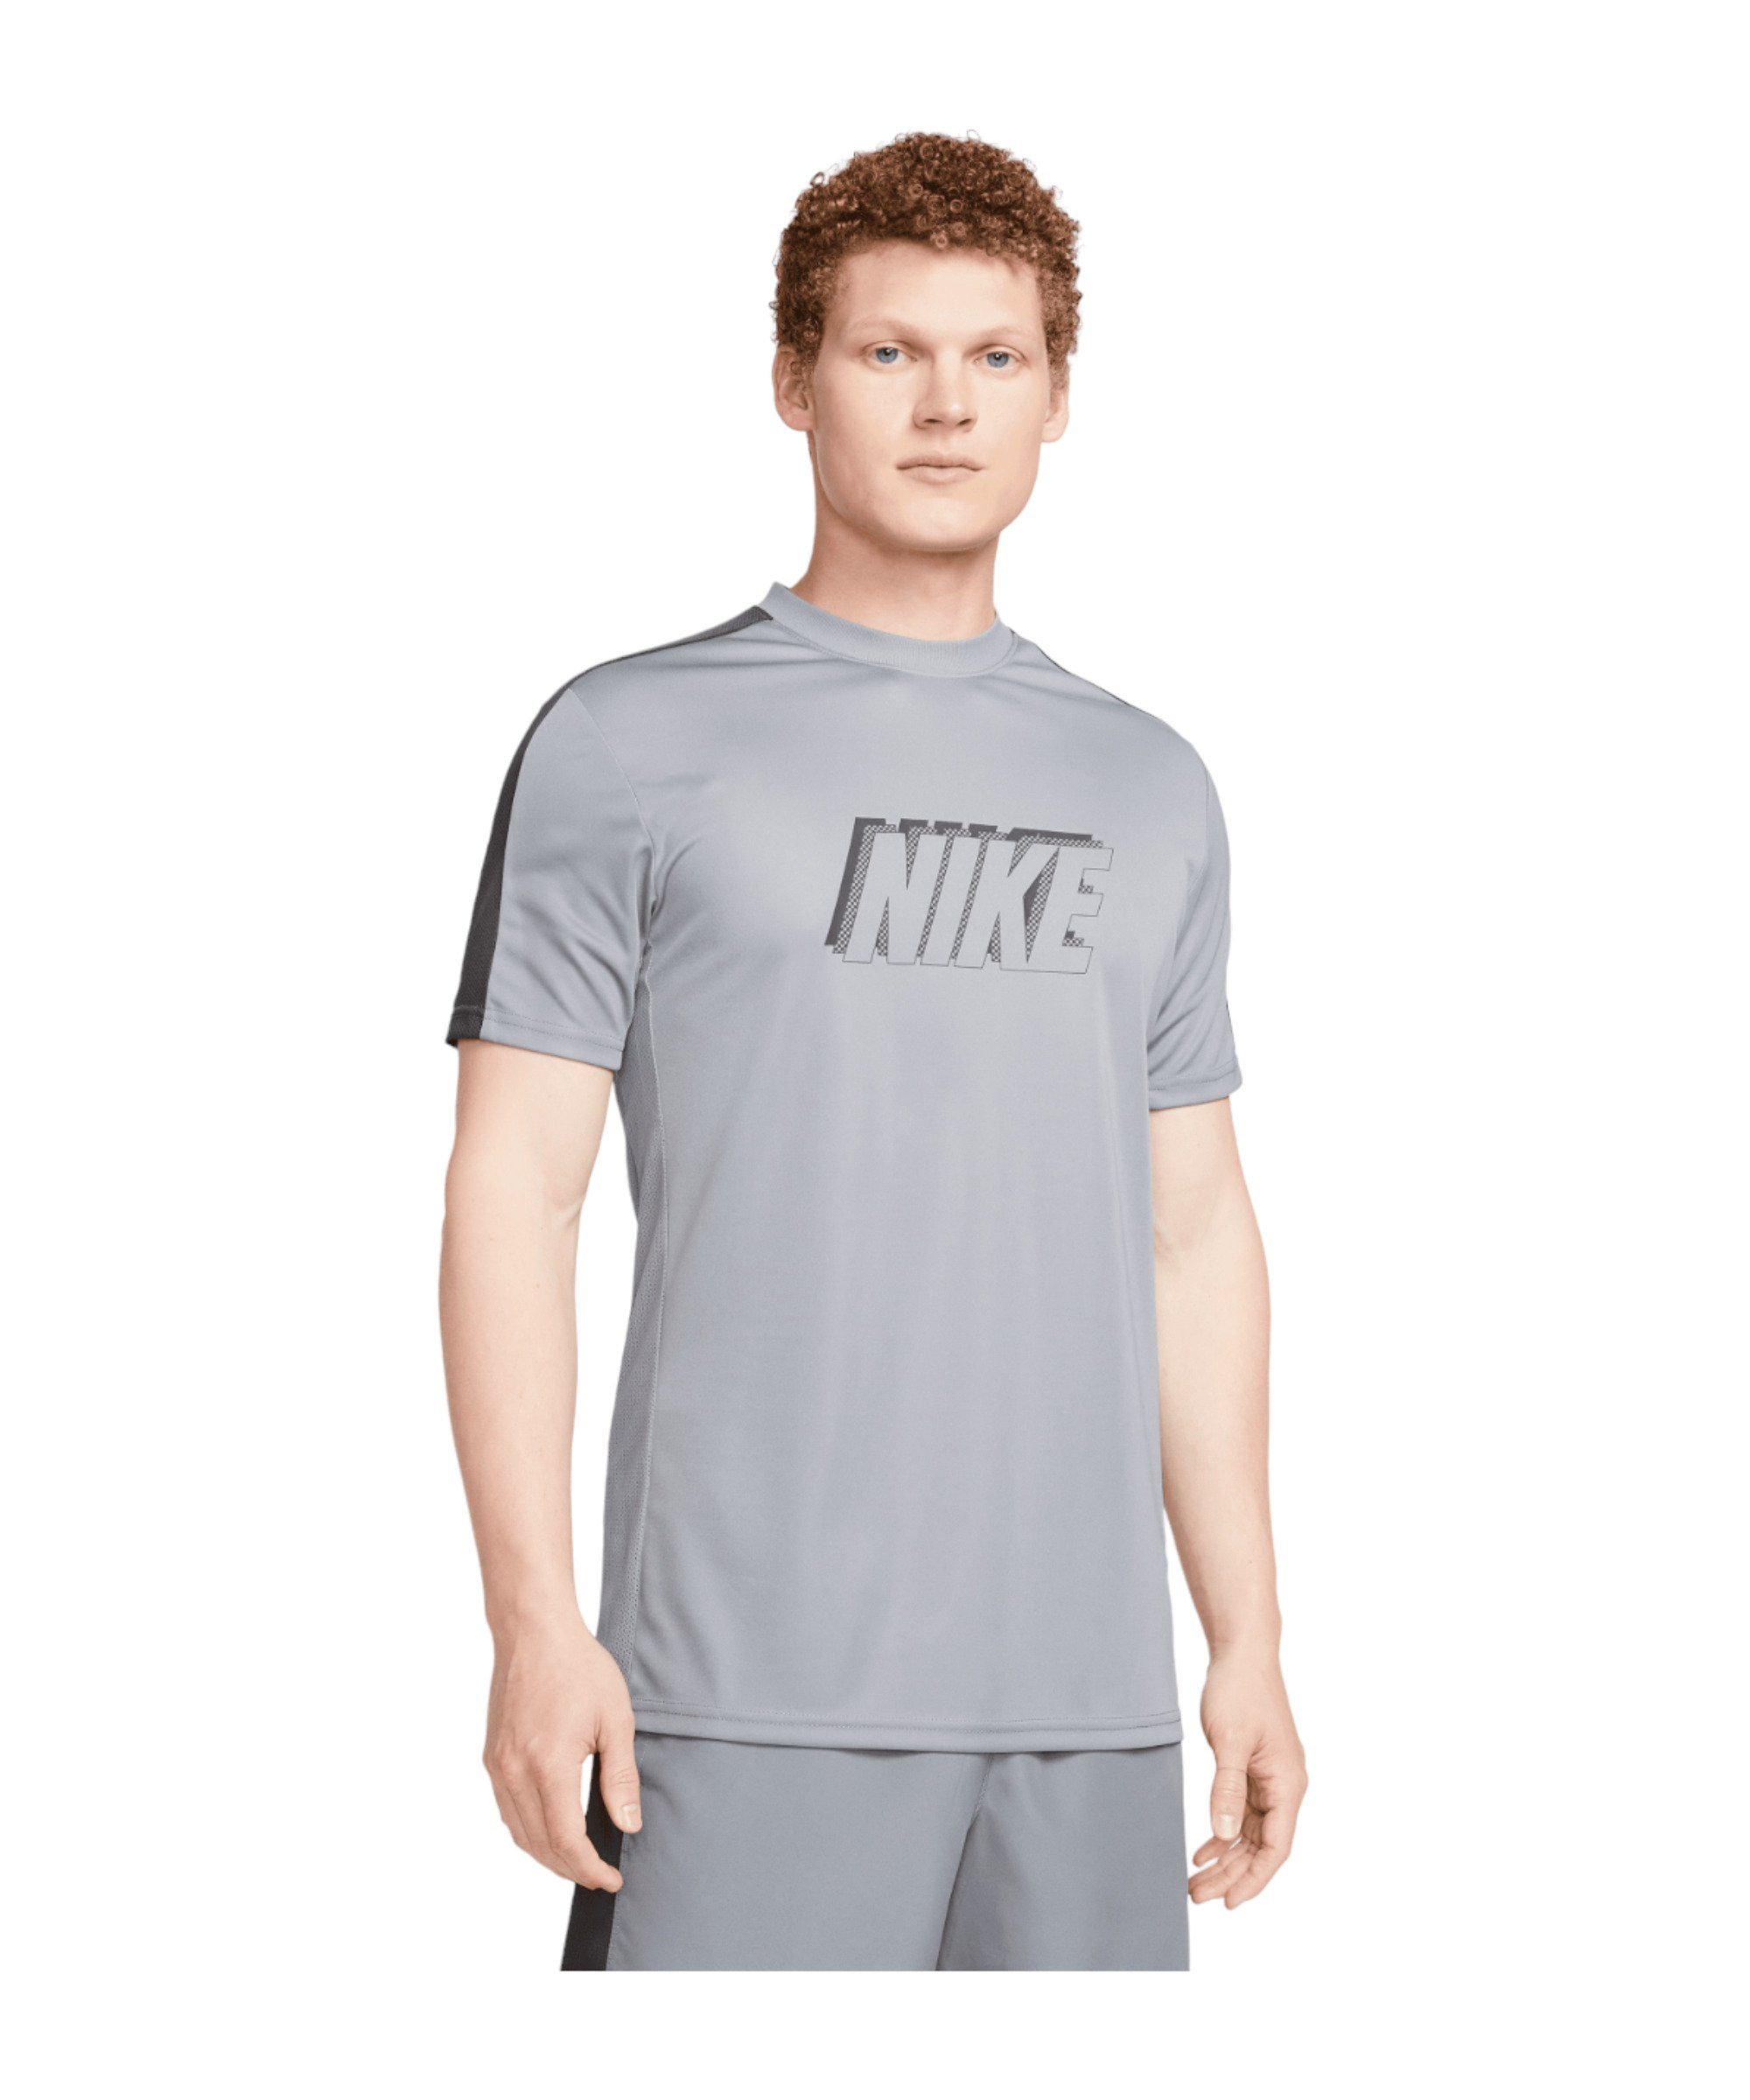 3D T-Shirt T-Shirt Logo Academy default graugraugrau Nike